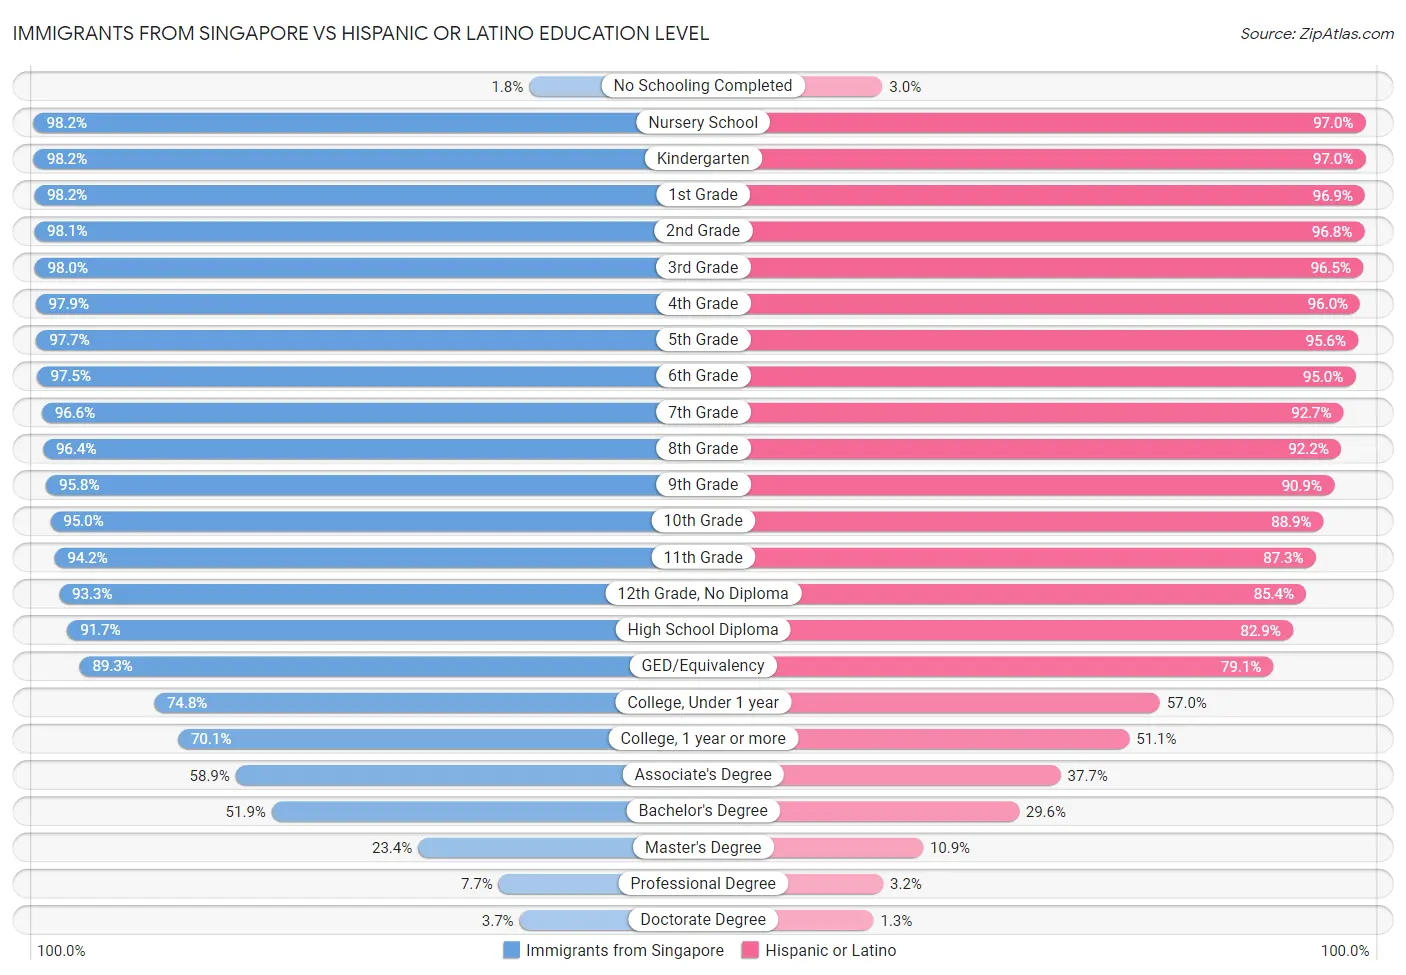 Immigrants from Singapore vs Hispanic or Latino Education Level